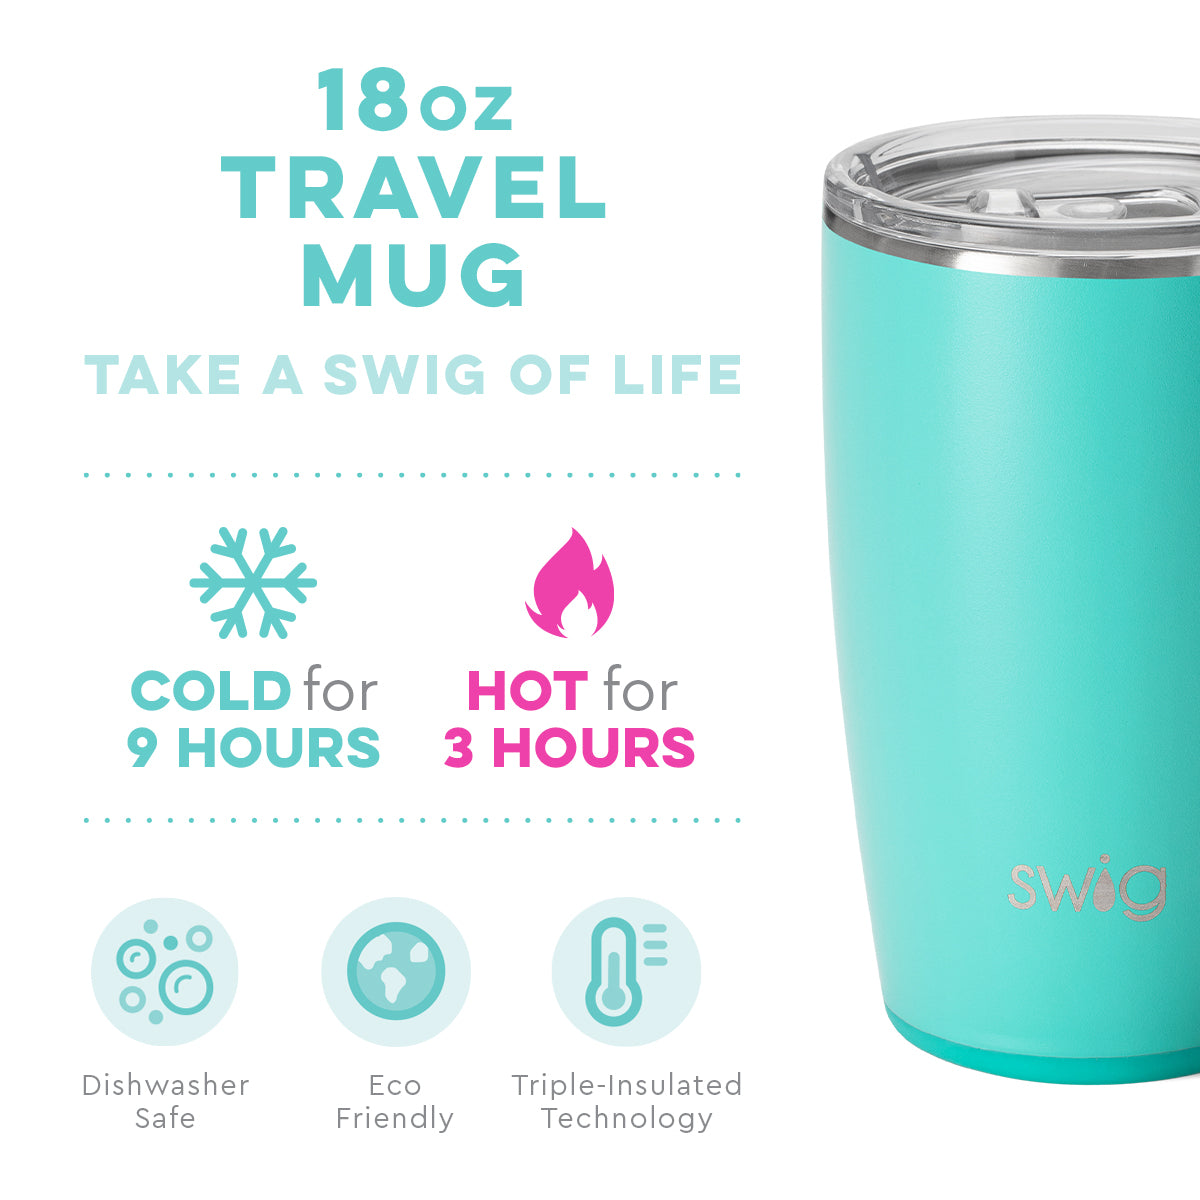 Swig : Shimmer Aquamarine Travel Mug (18oz)